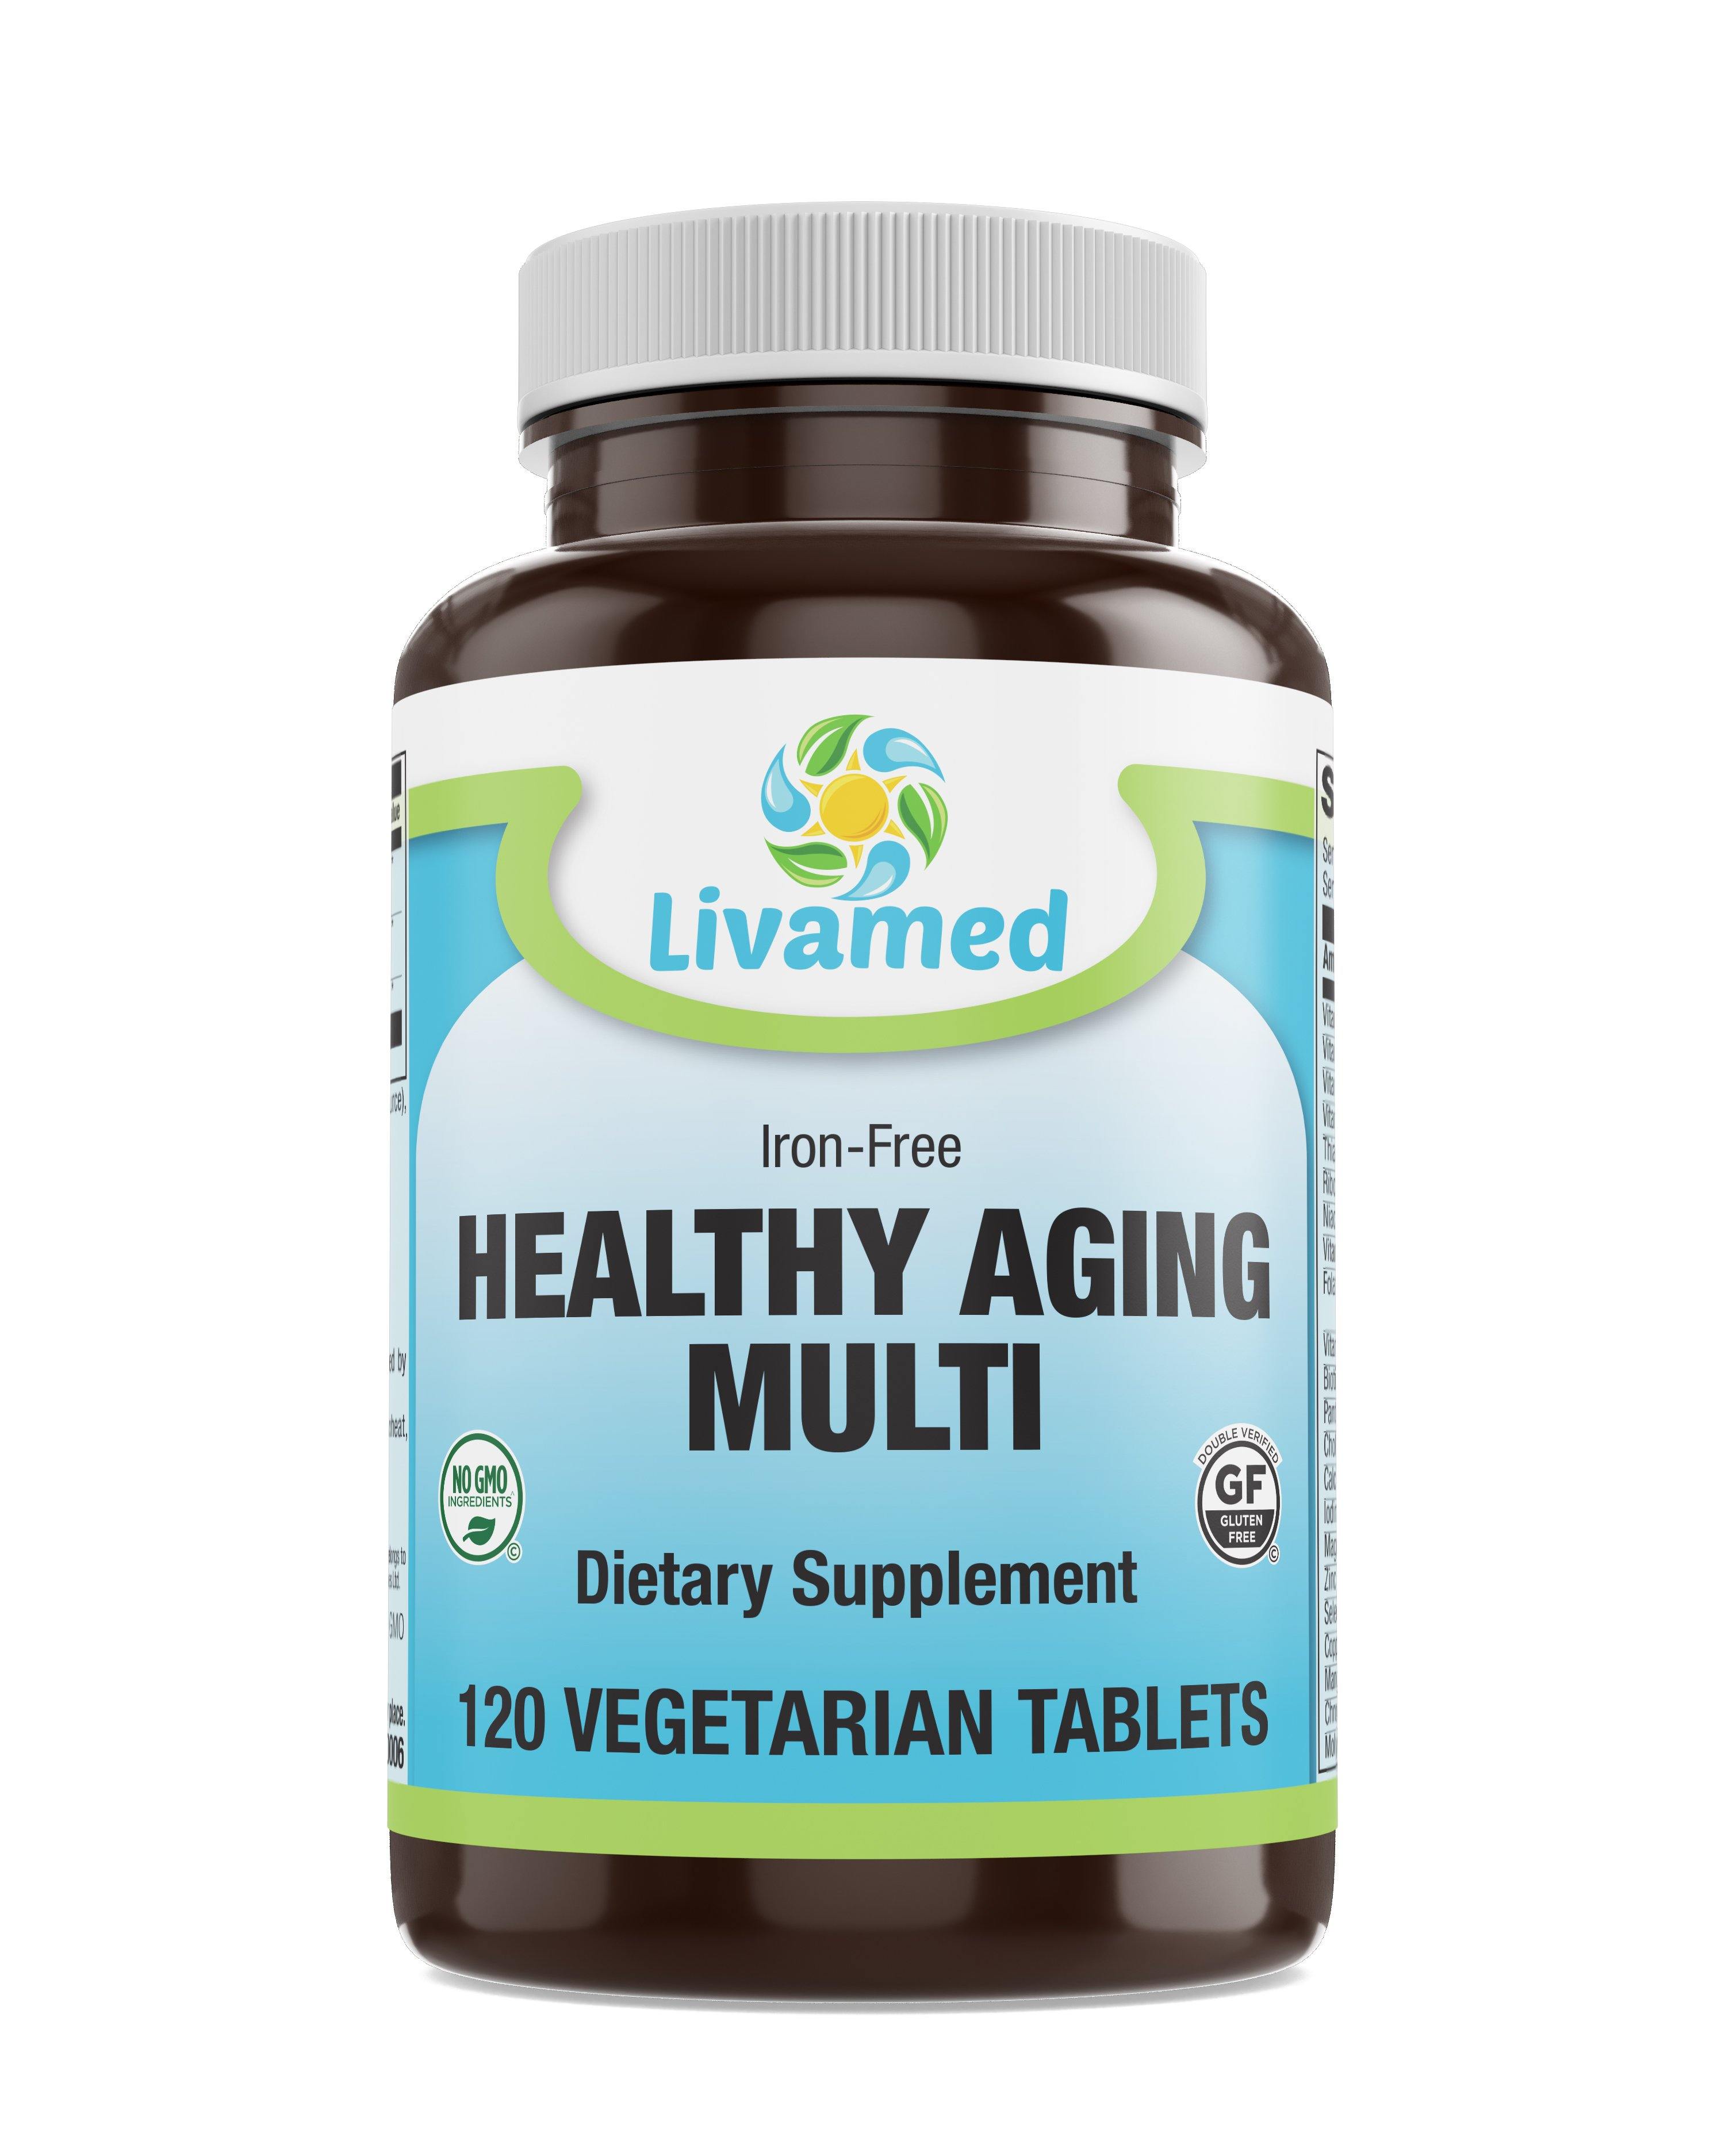 Livamed - Healthy Aging Multi Iron Free Veg Tabs 120 Count - Livamed Vitamins